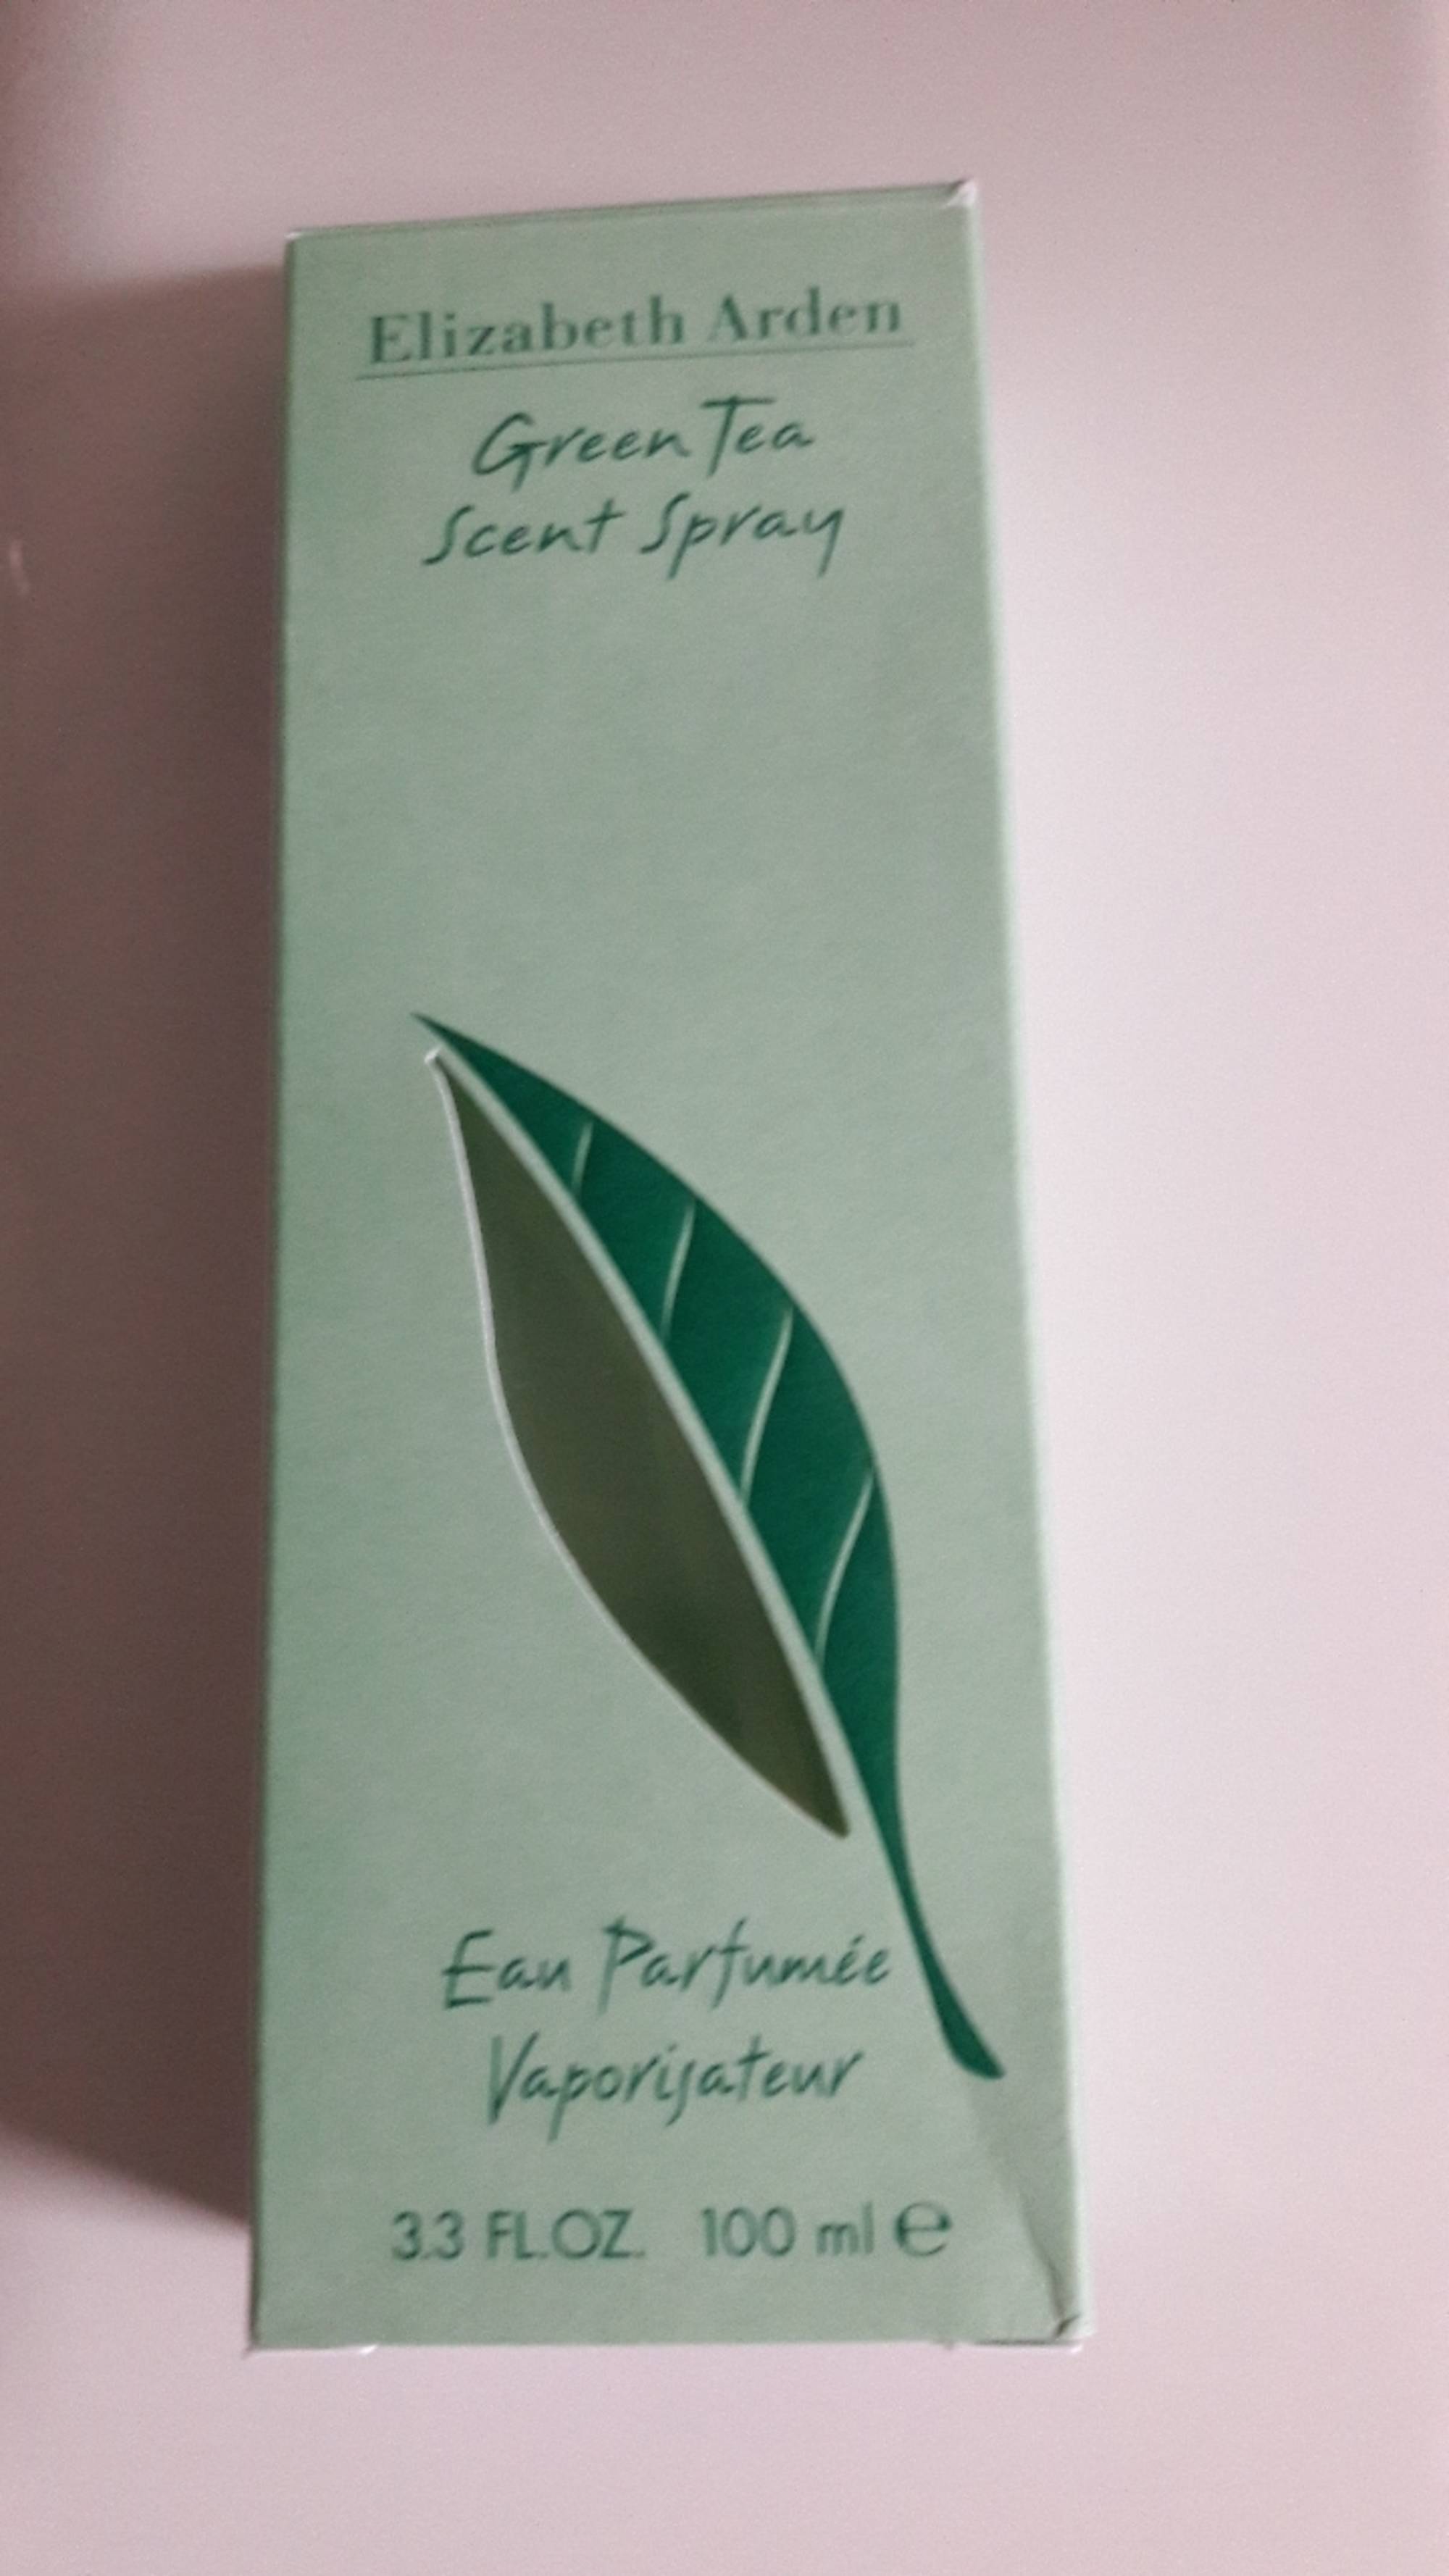 ELIZABETH ARDEN - Green tea scent spray - Eau parfumée